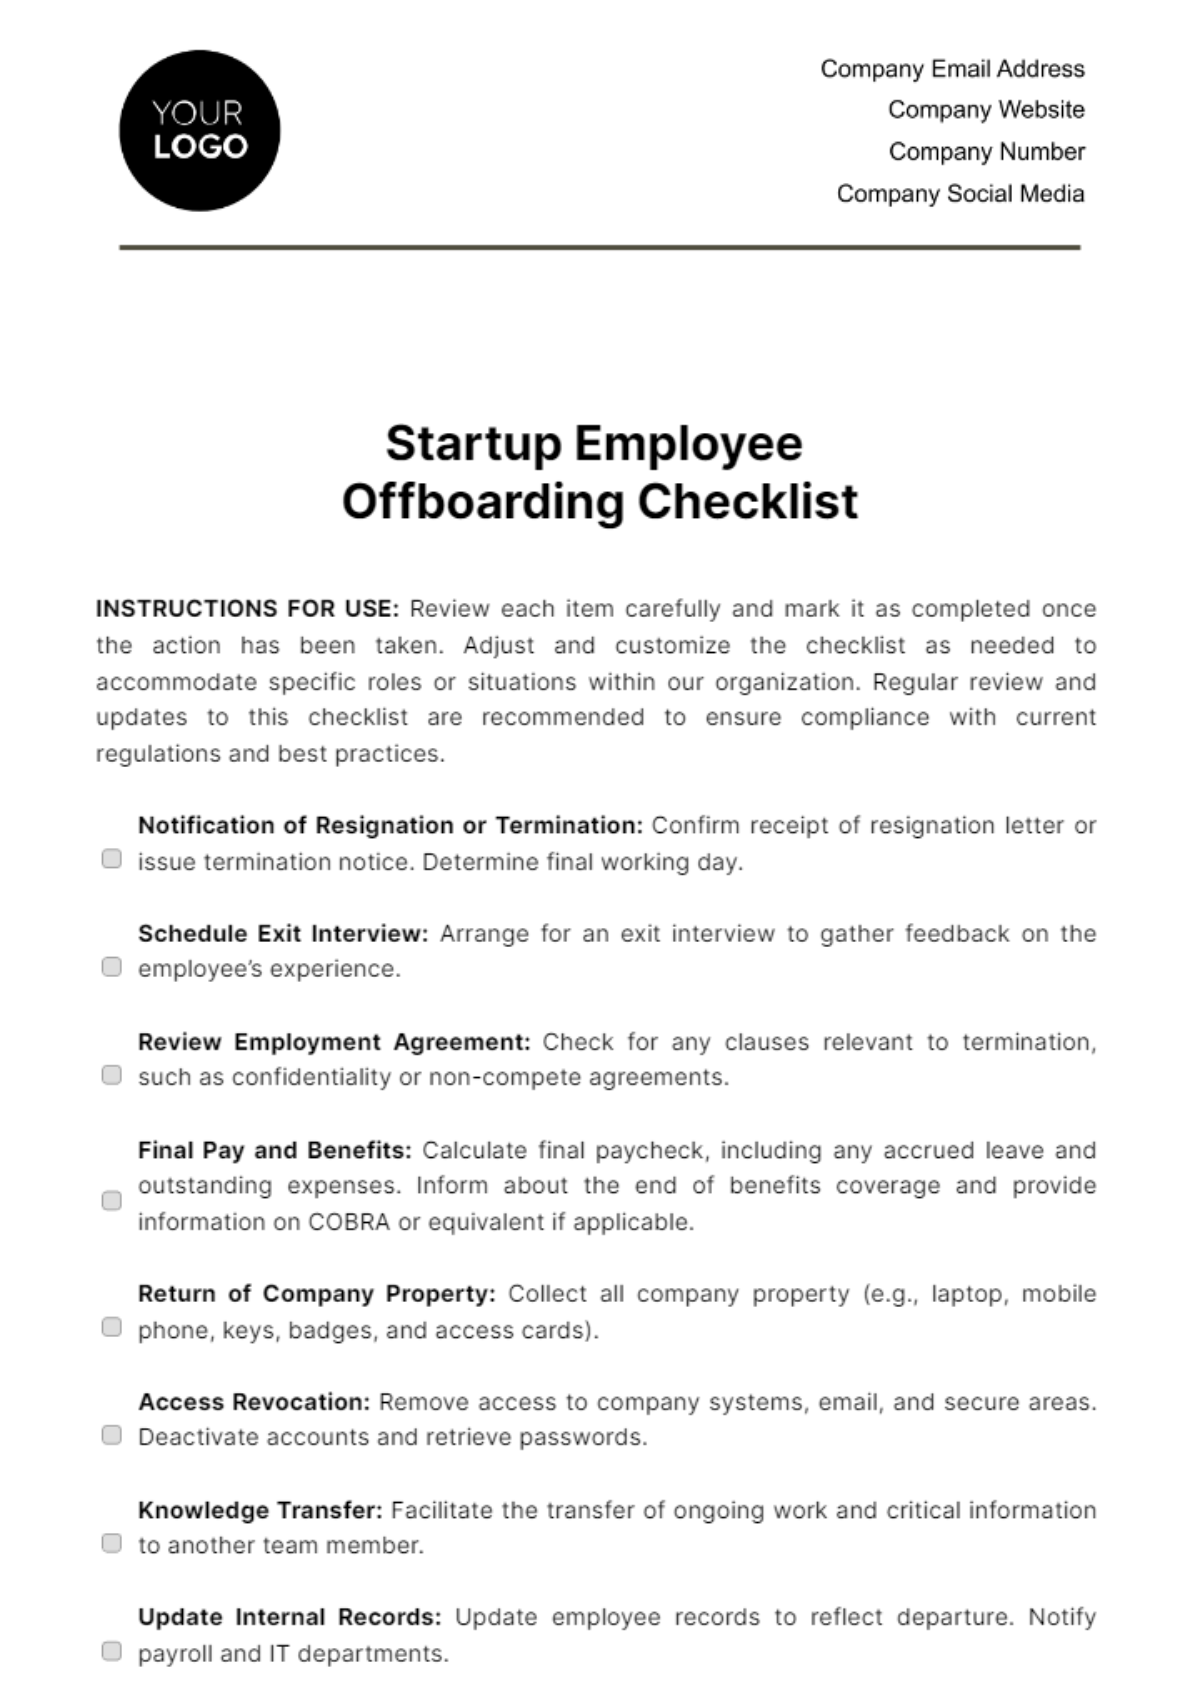 Free Startup Employee Offboarding Checklist Template